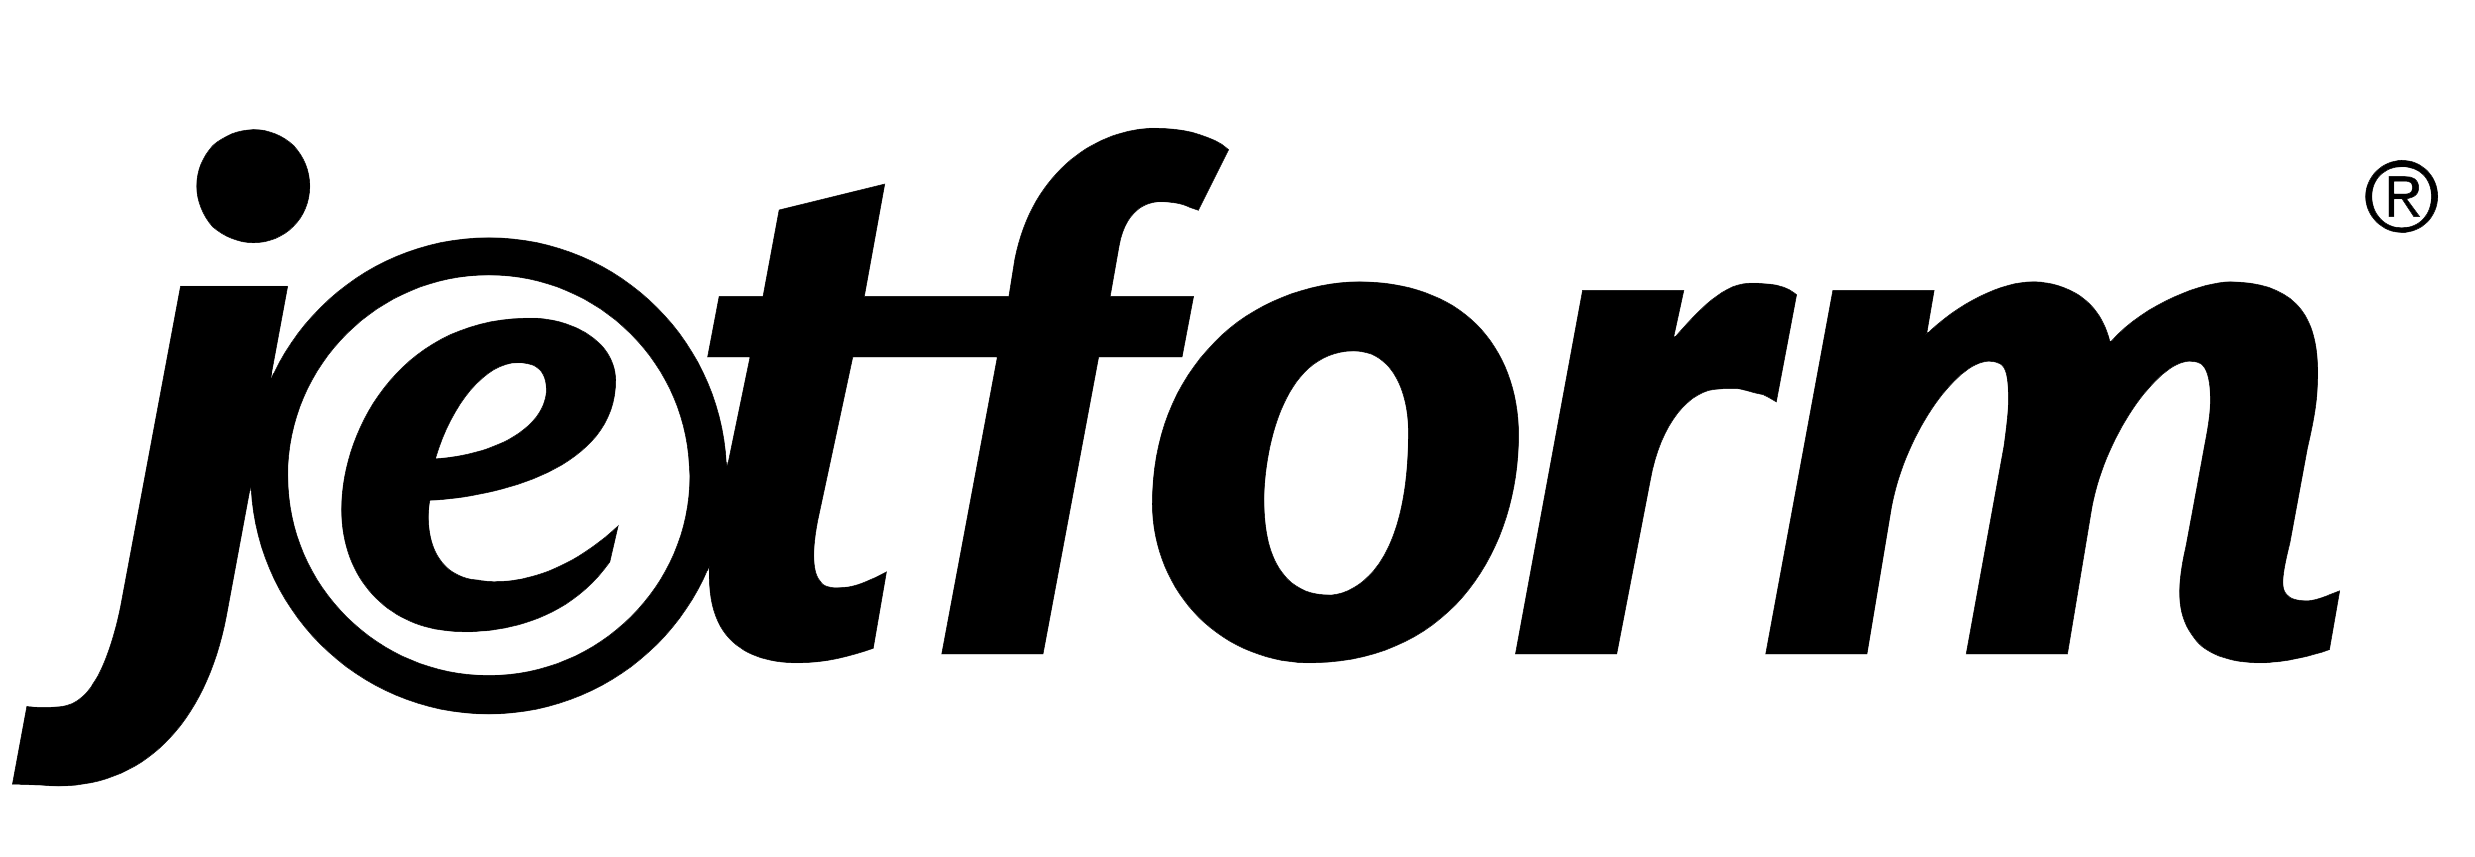 Jetform logo